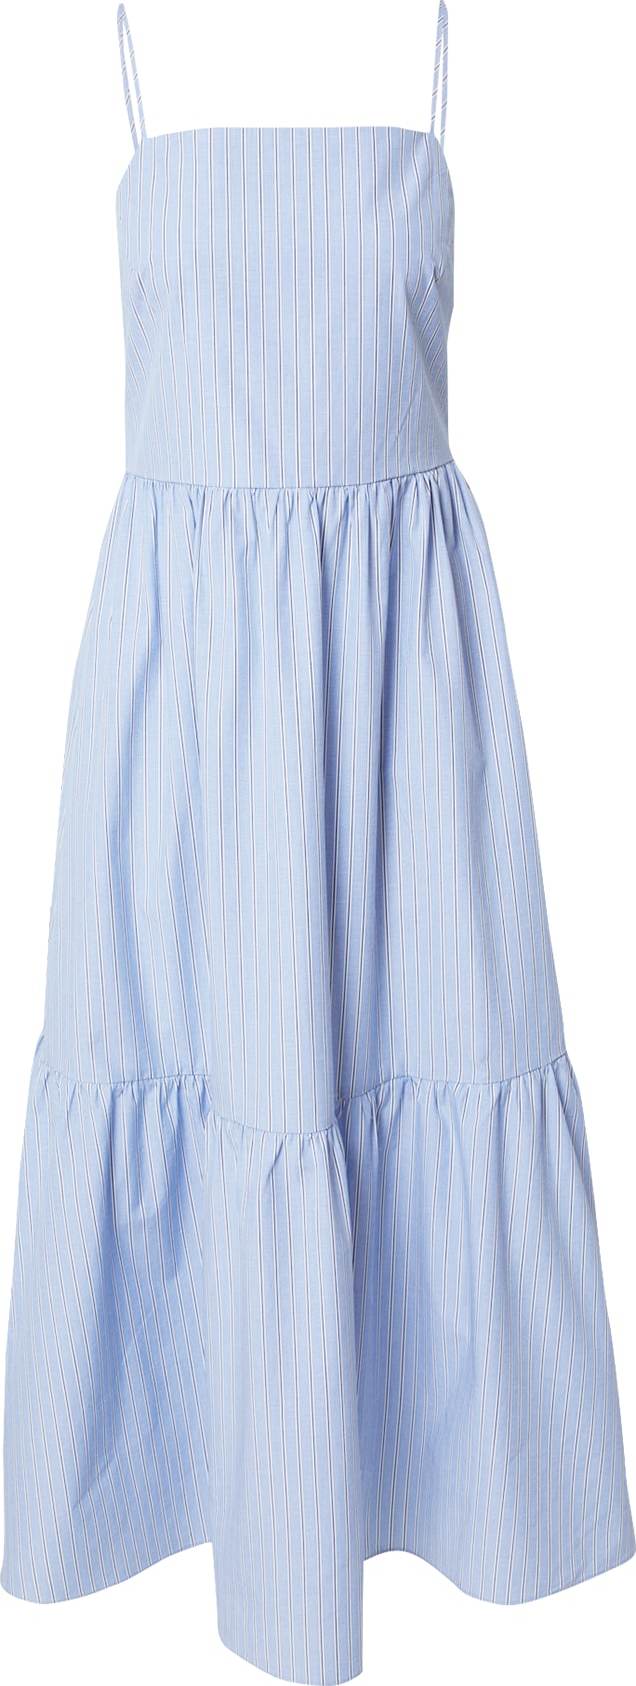 Twist & Tango Letní šaty 'KIONA' marine modrá / světlemodrá / bílá